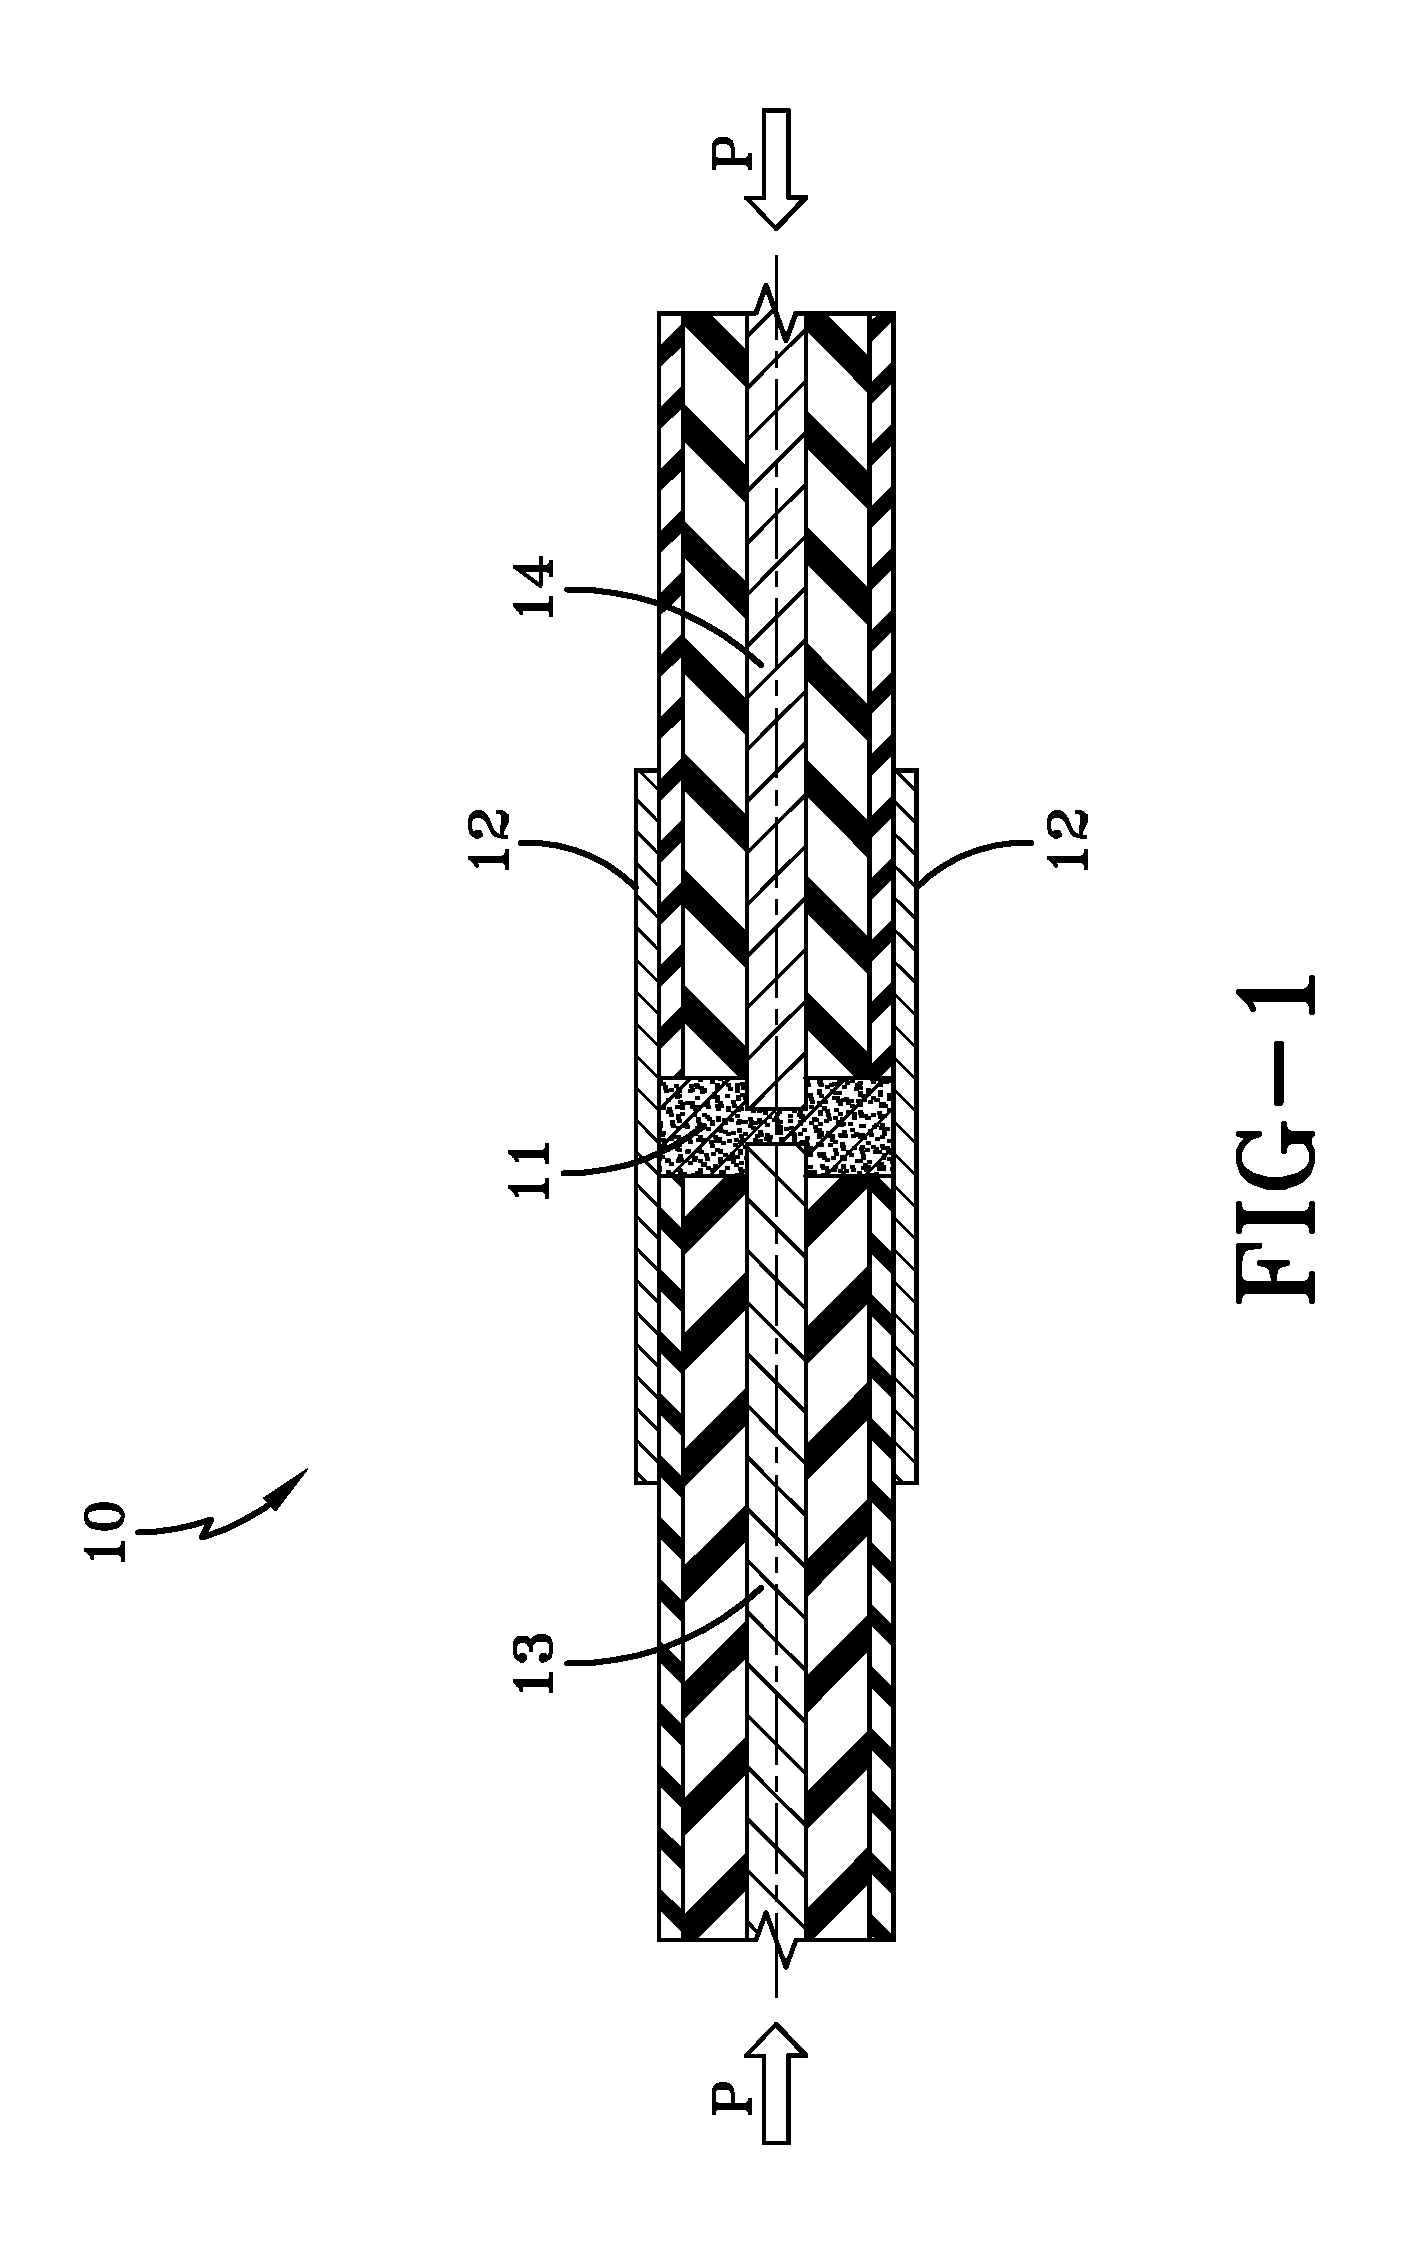 Conveyor belt with zero stage splice